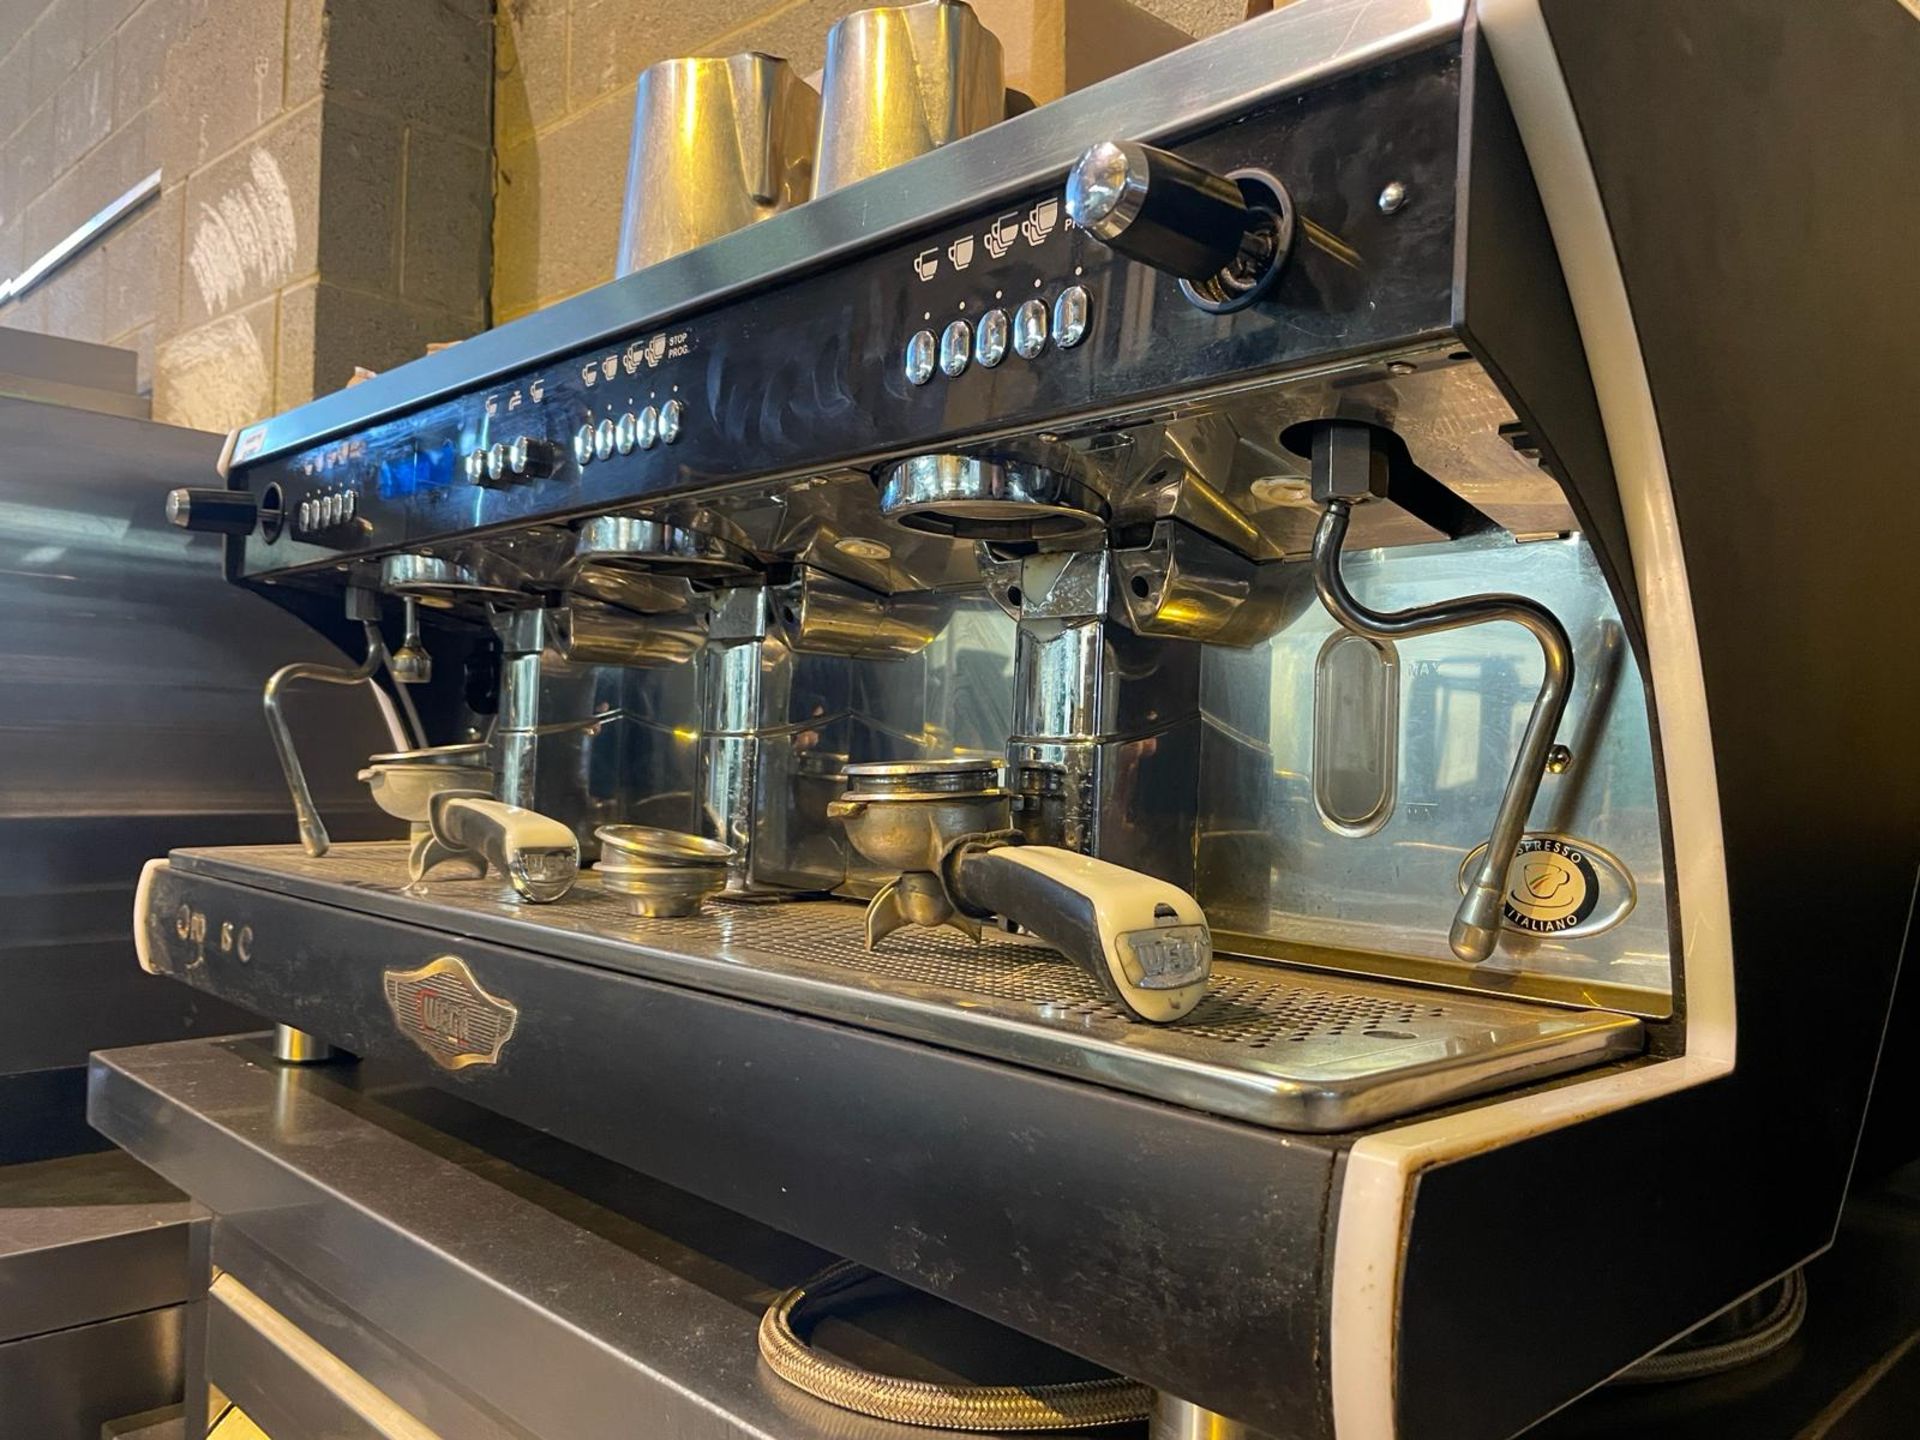 1 x Polaris Wega 3 Group Commercial Espresso Coffee Machine - Stainless Steel / Black Exterior - Image 5 of 11